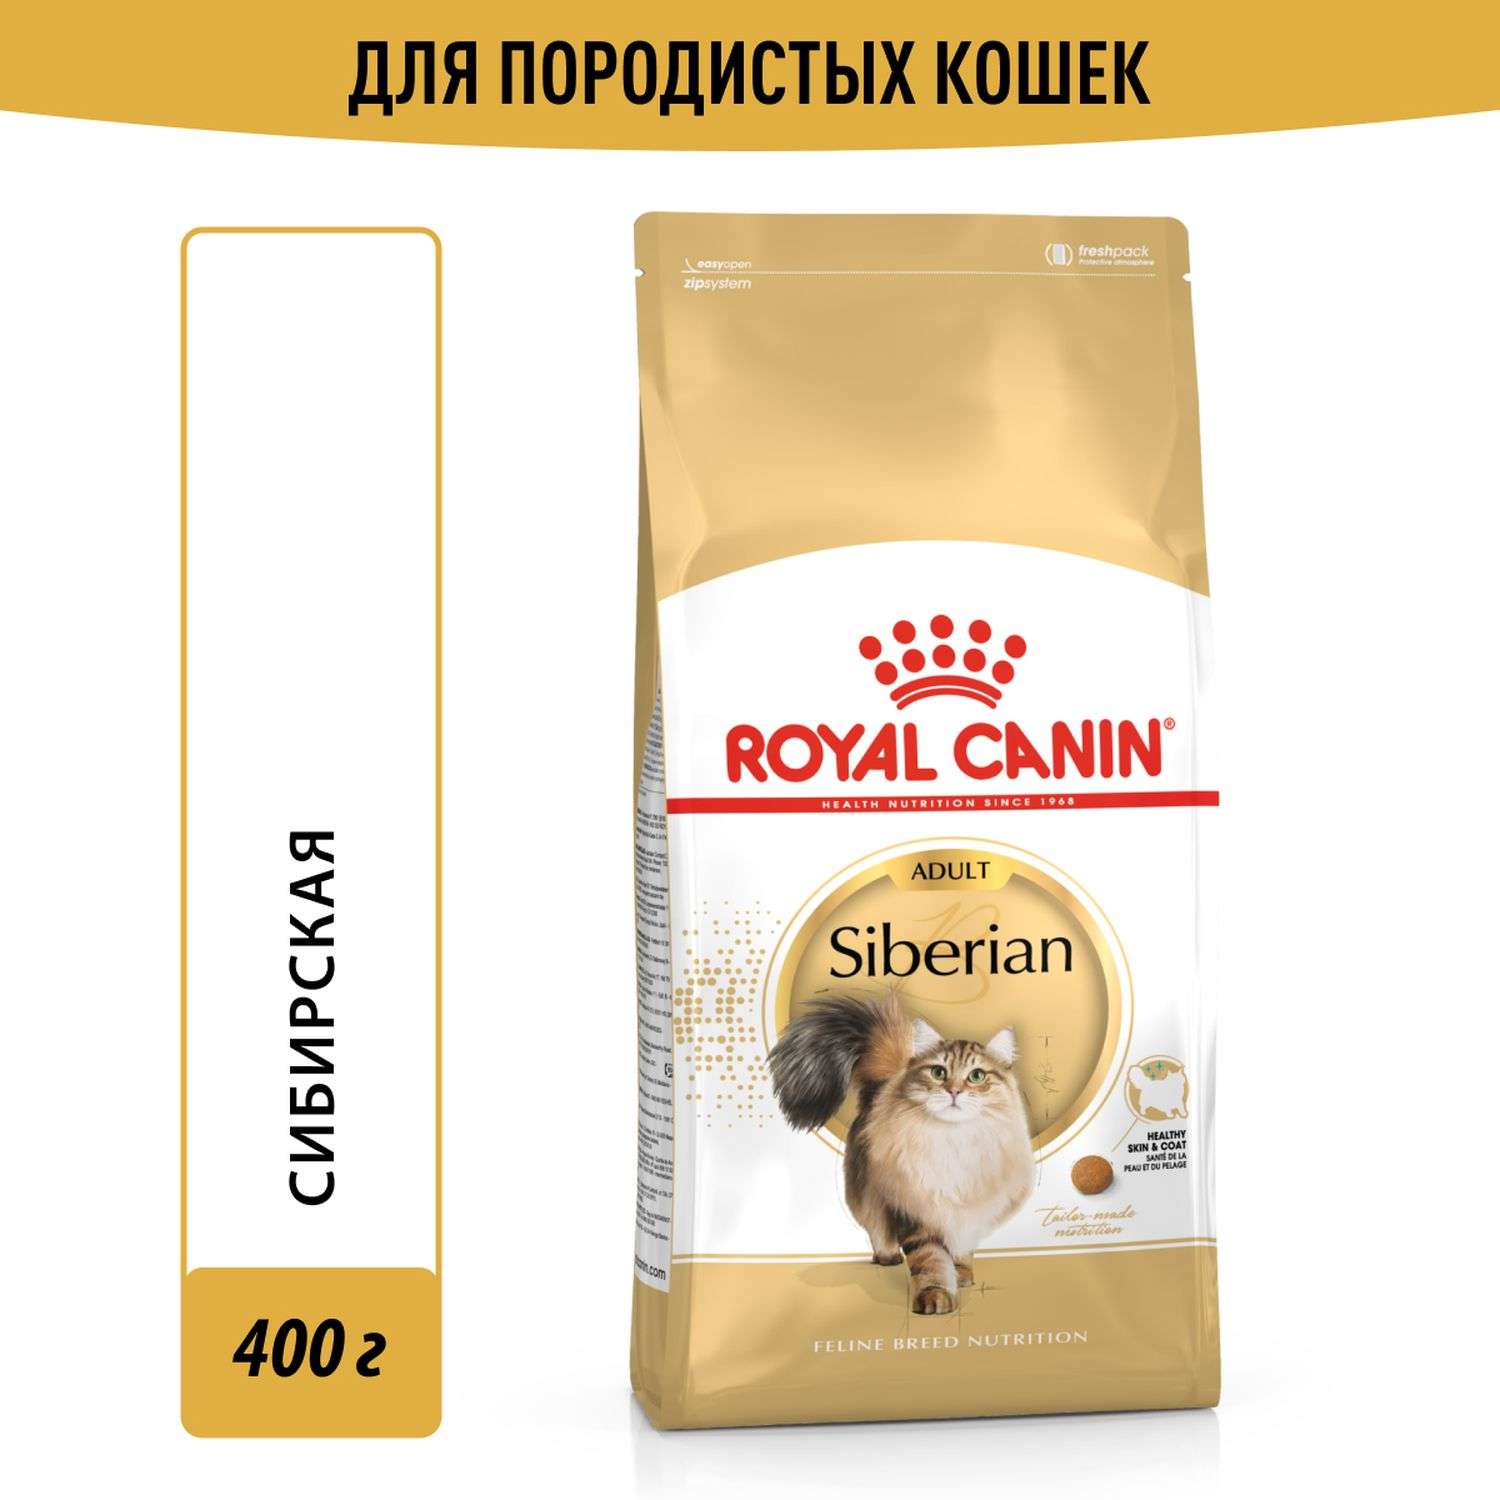 Корм сухой для кошек ROYAL CANIN Siberian 400г сибирских пород - фото 1